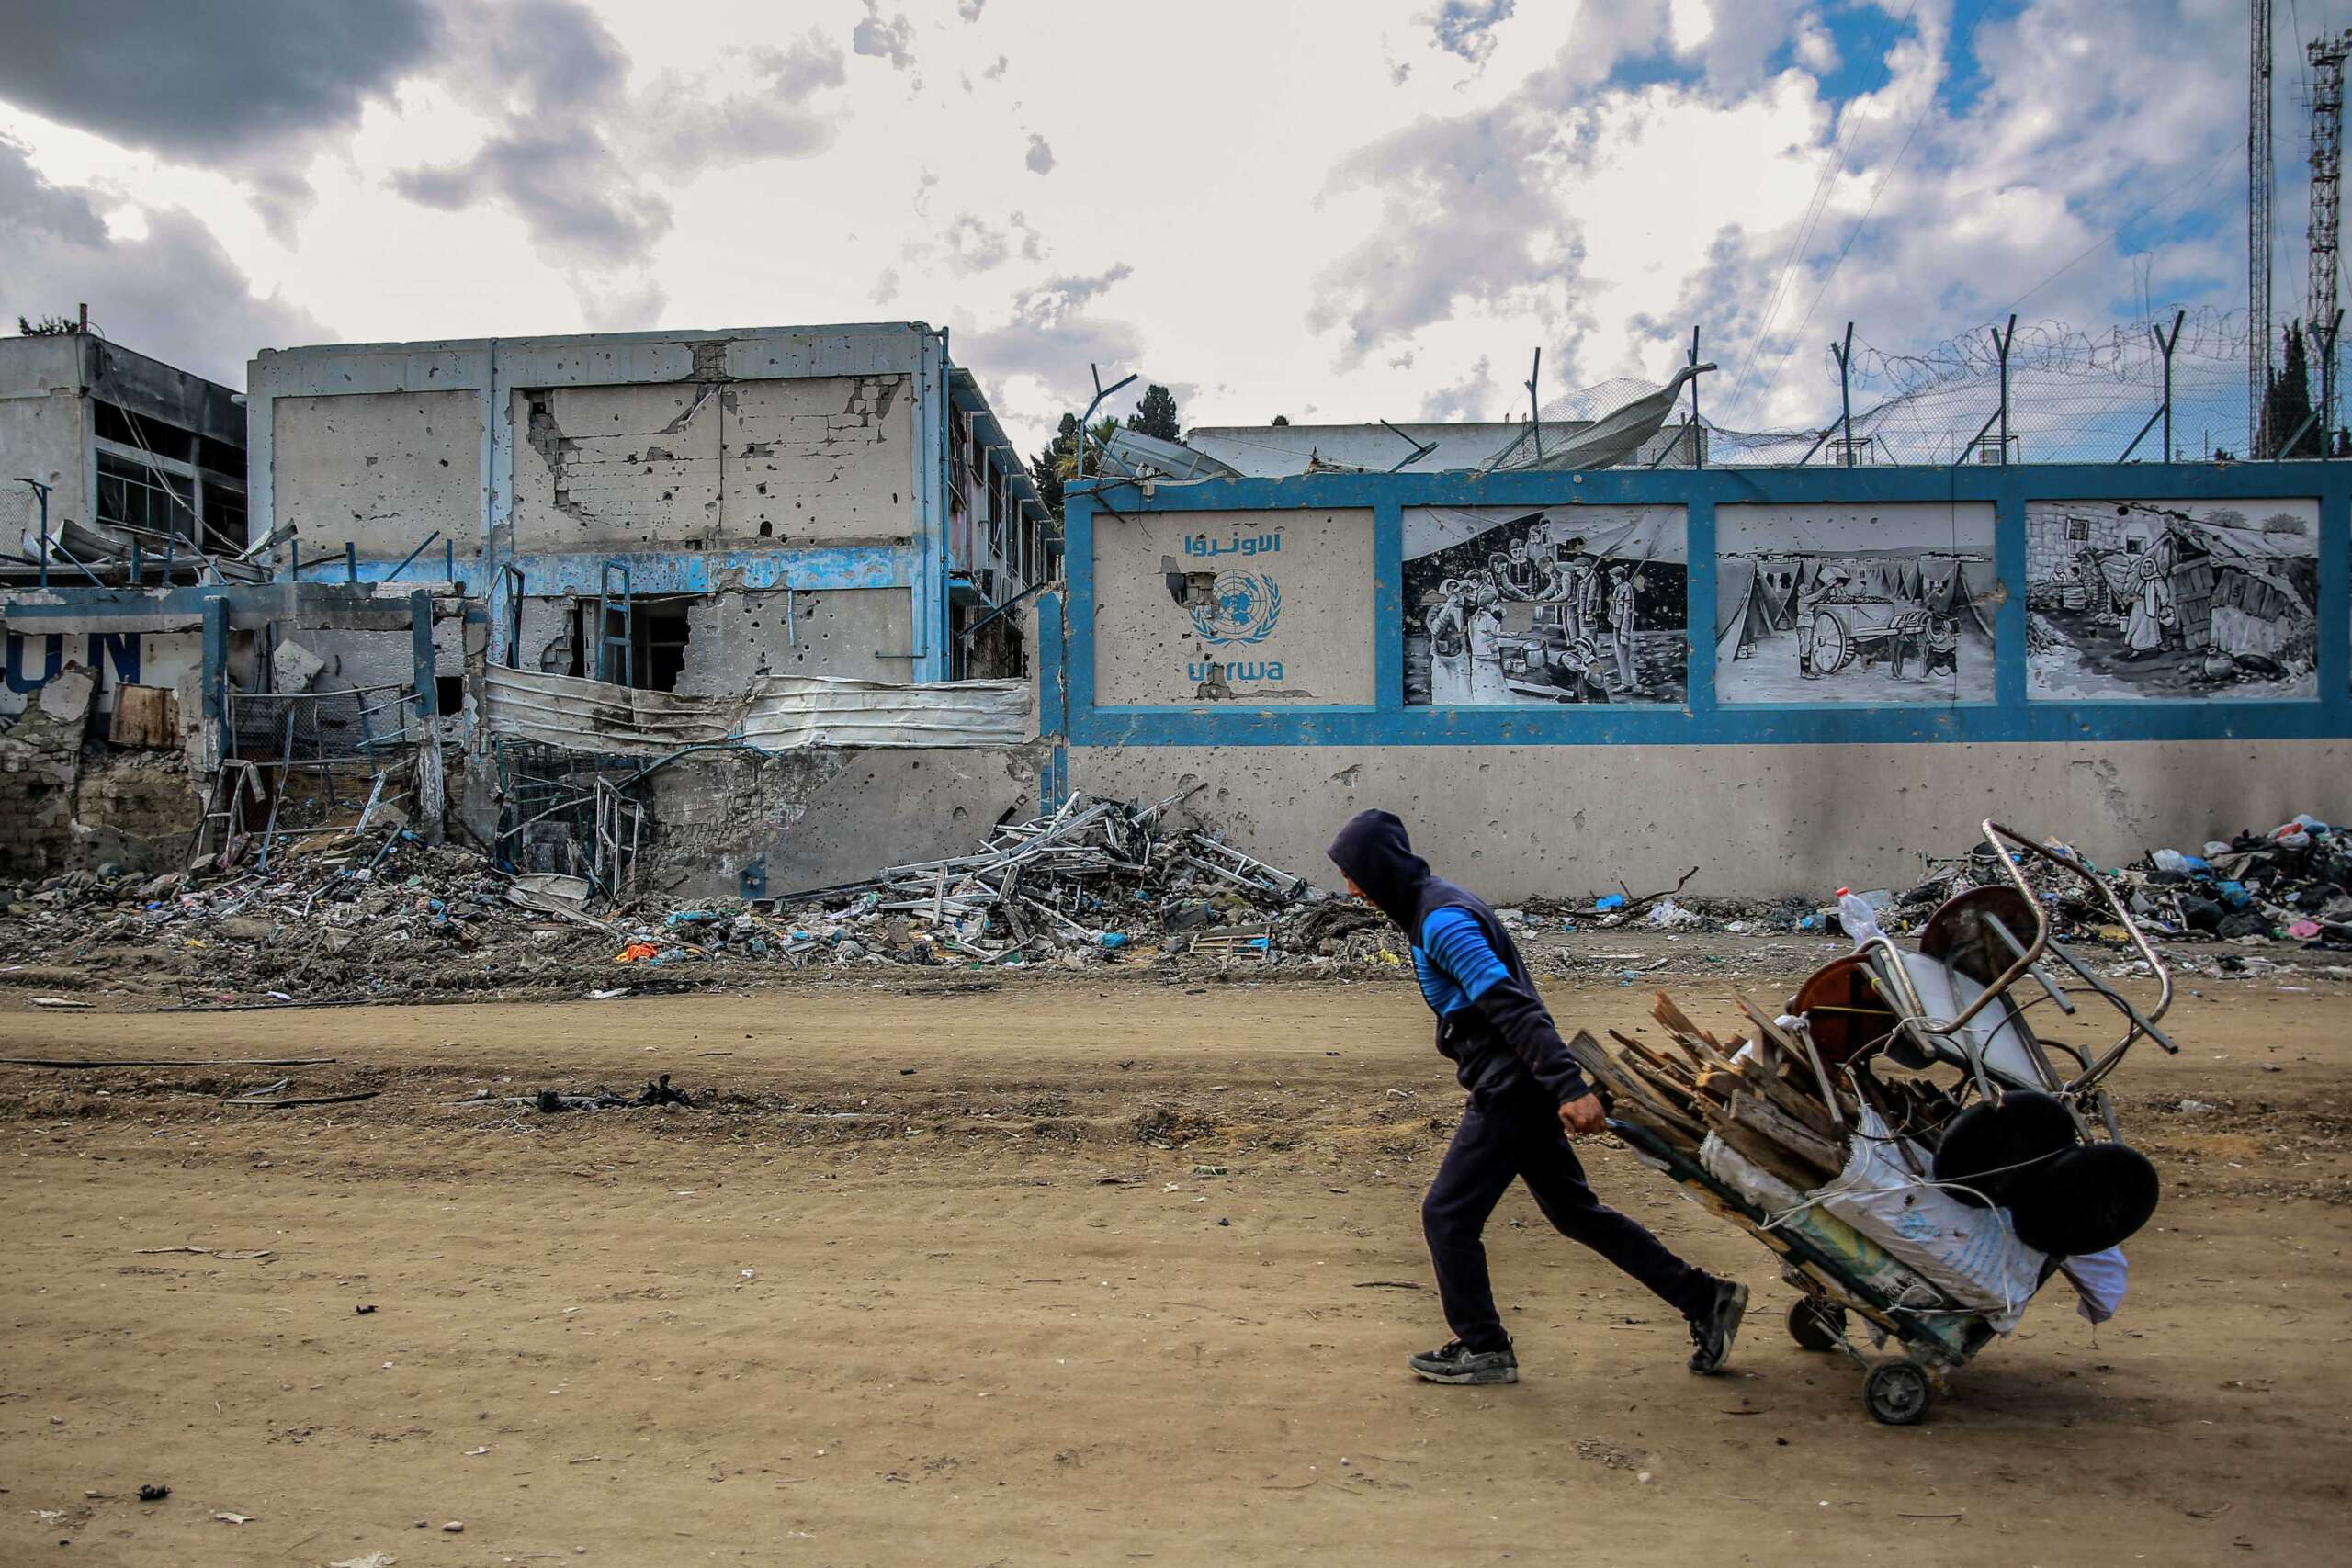 Israel has razed UNRWA headquarters in Gaza – a “blatant” war crime, the agency says